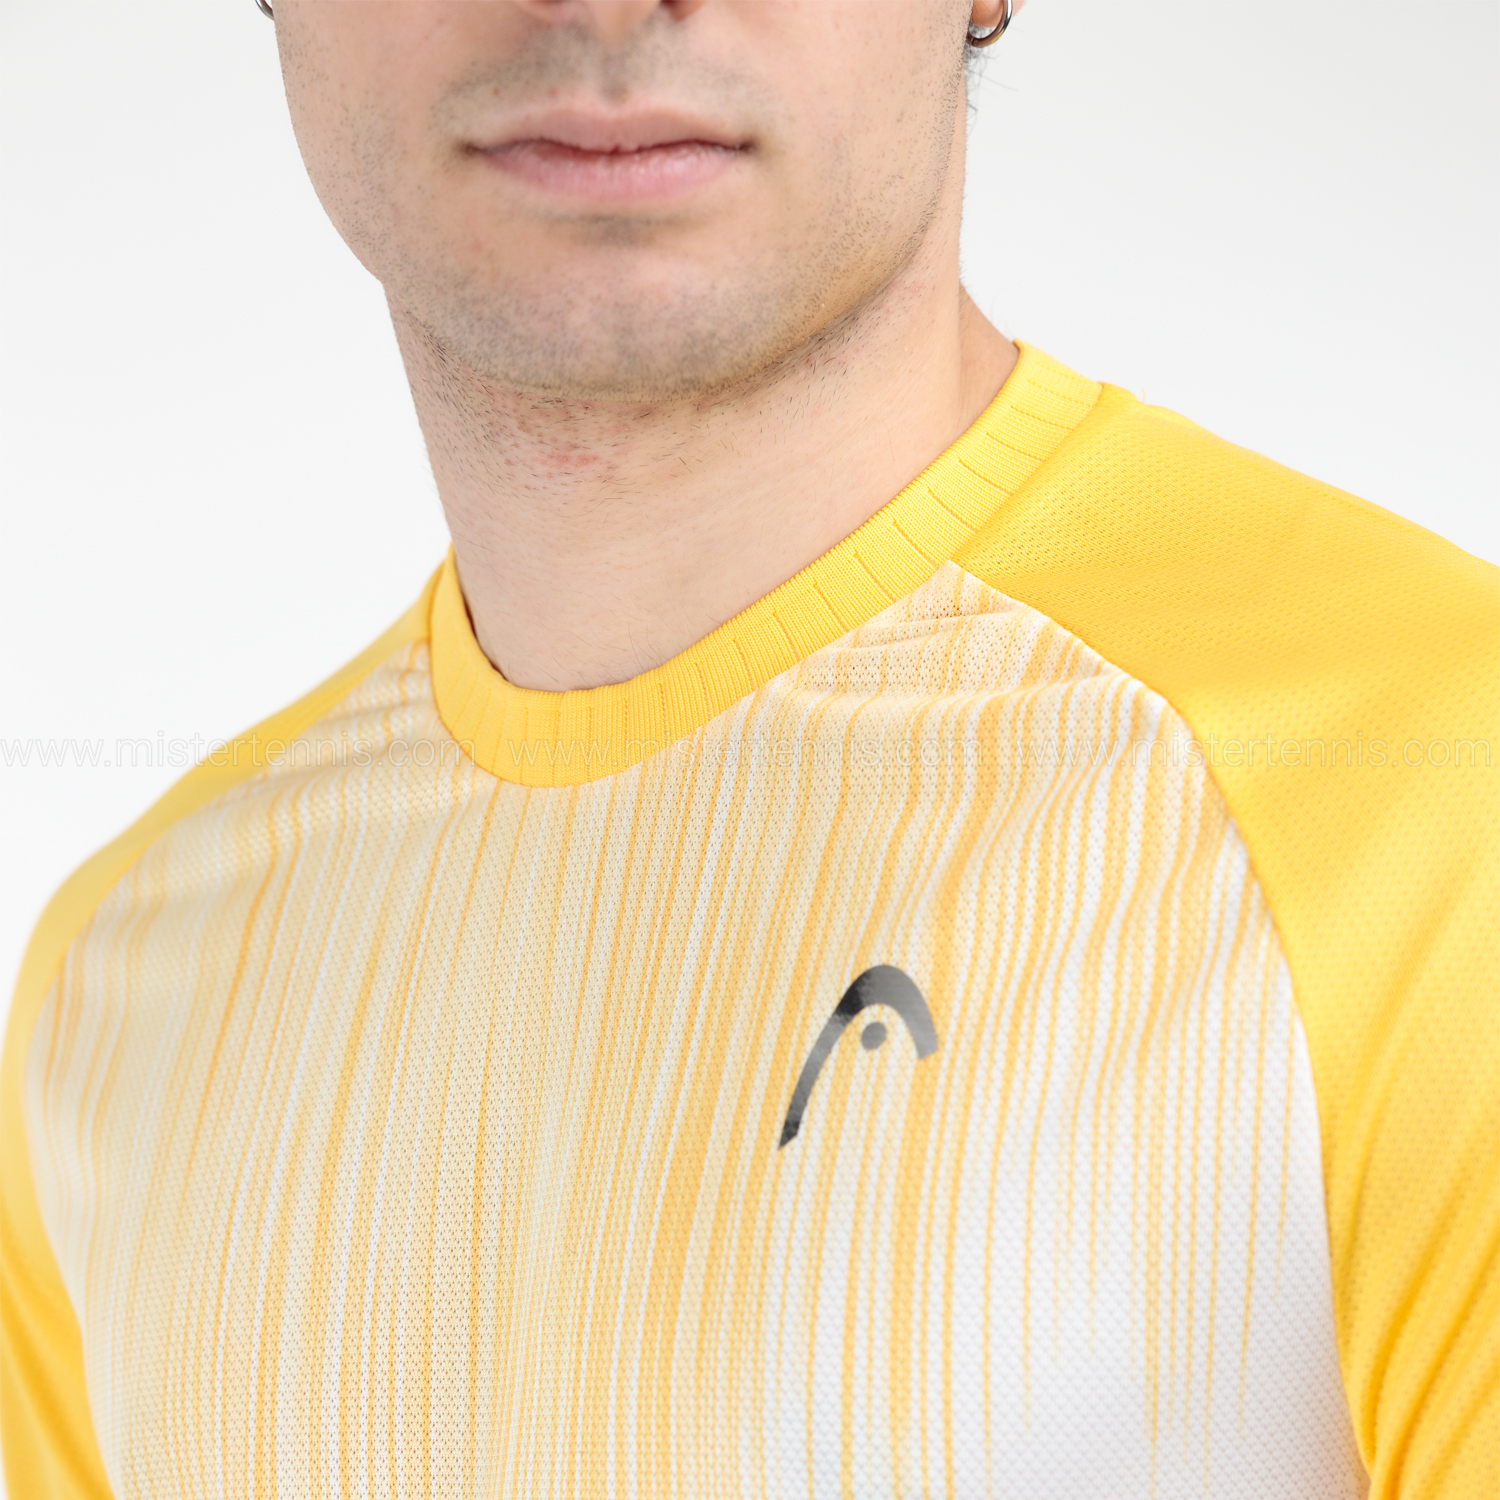 Head Performance Camiseta - Print Perf/Banana